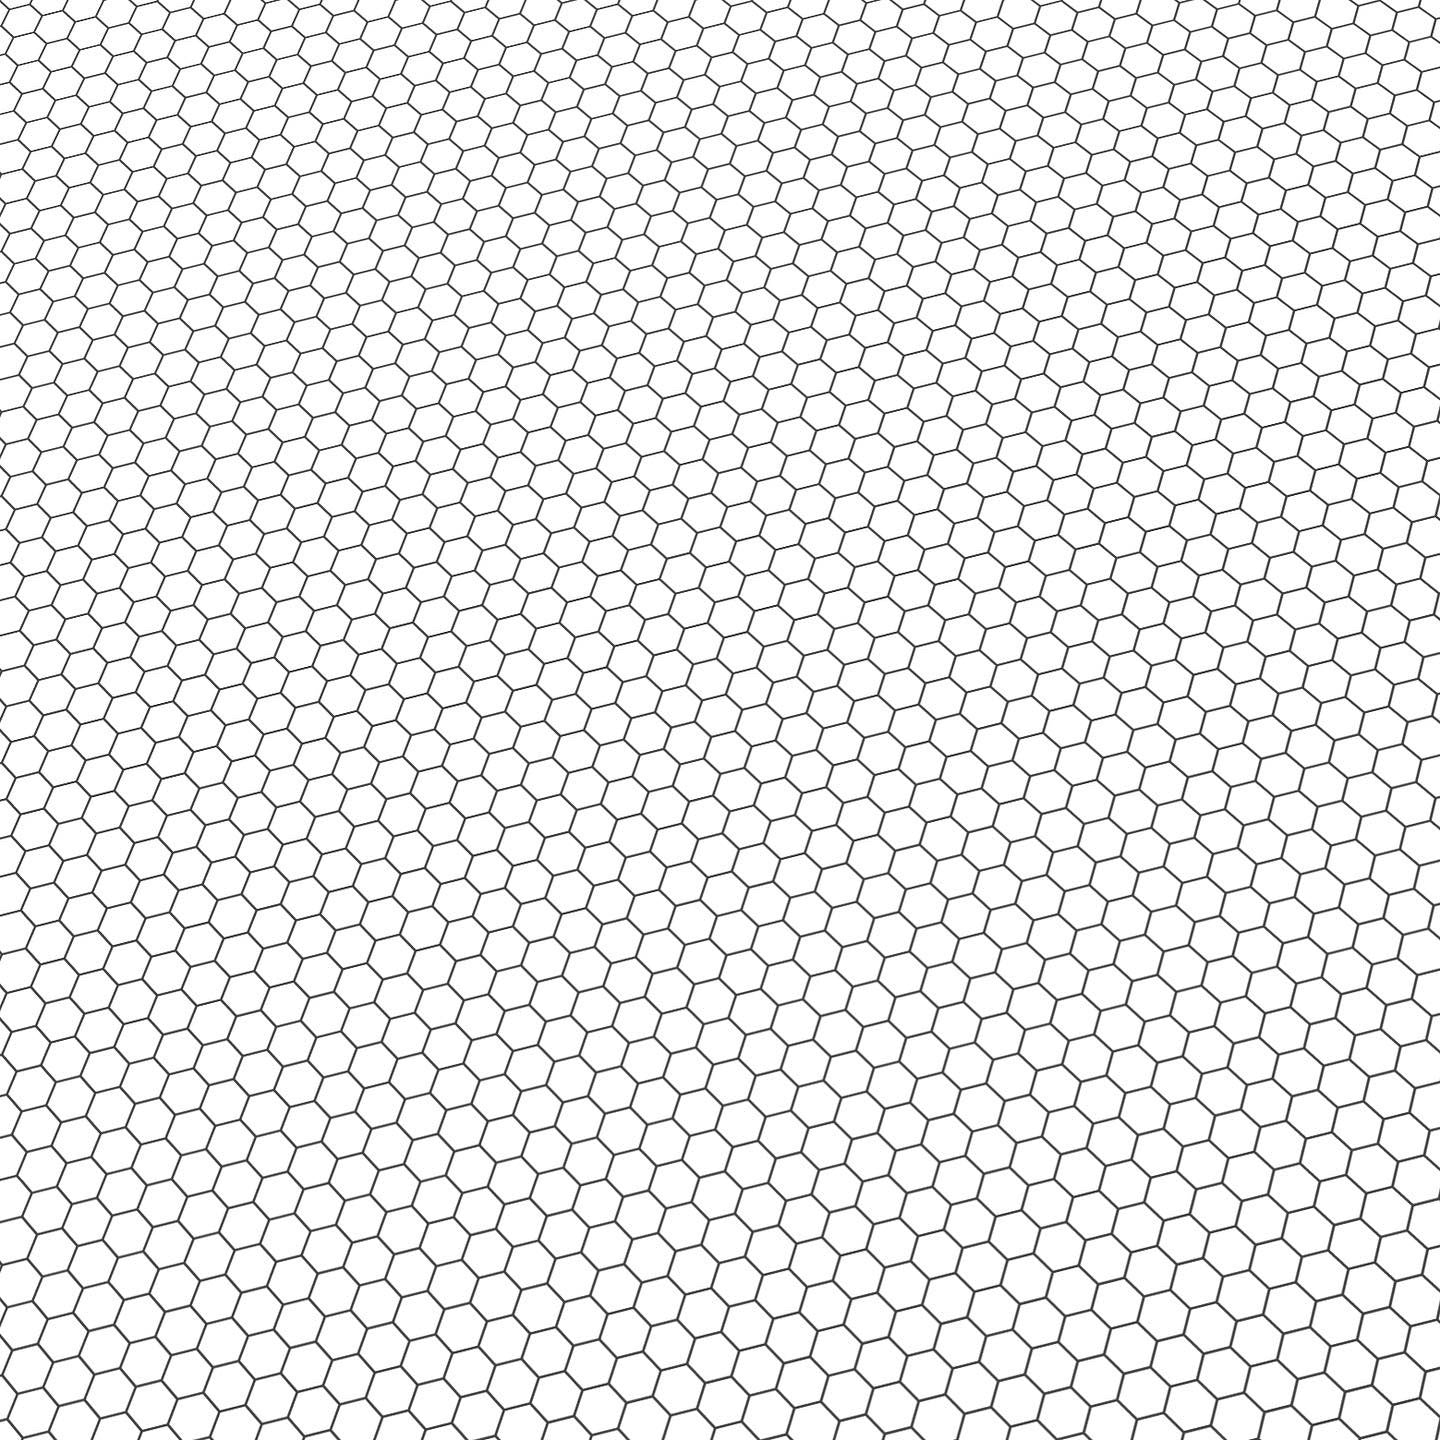 Black and White Hexagon Paper Tile